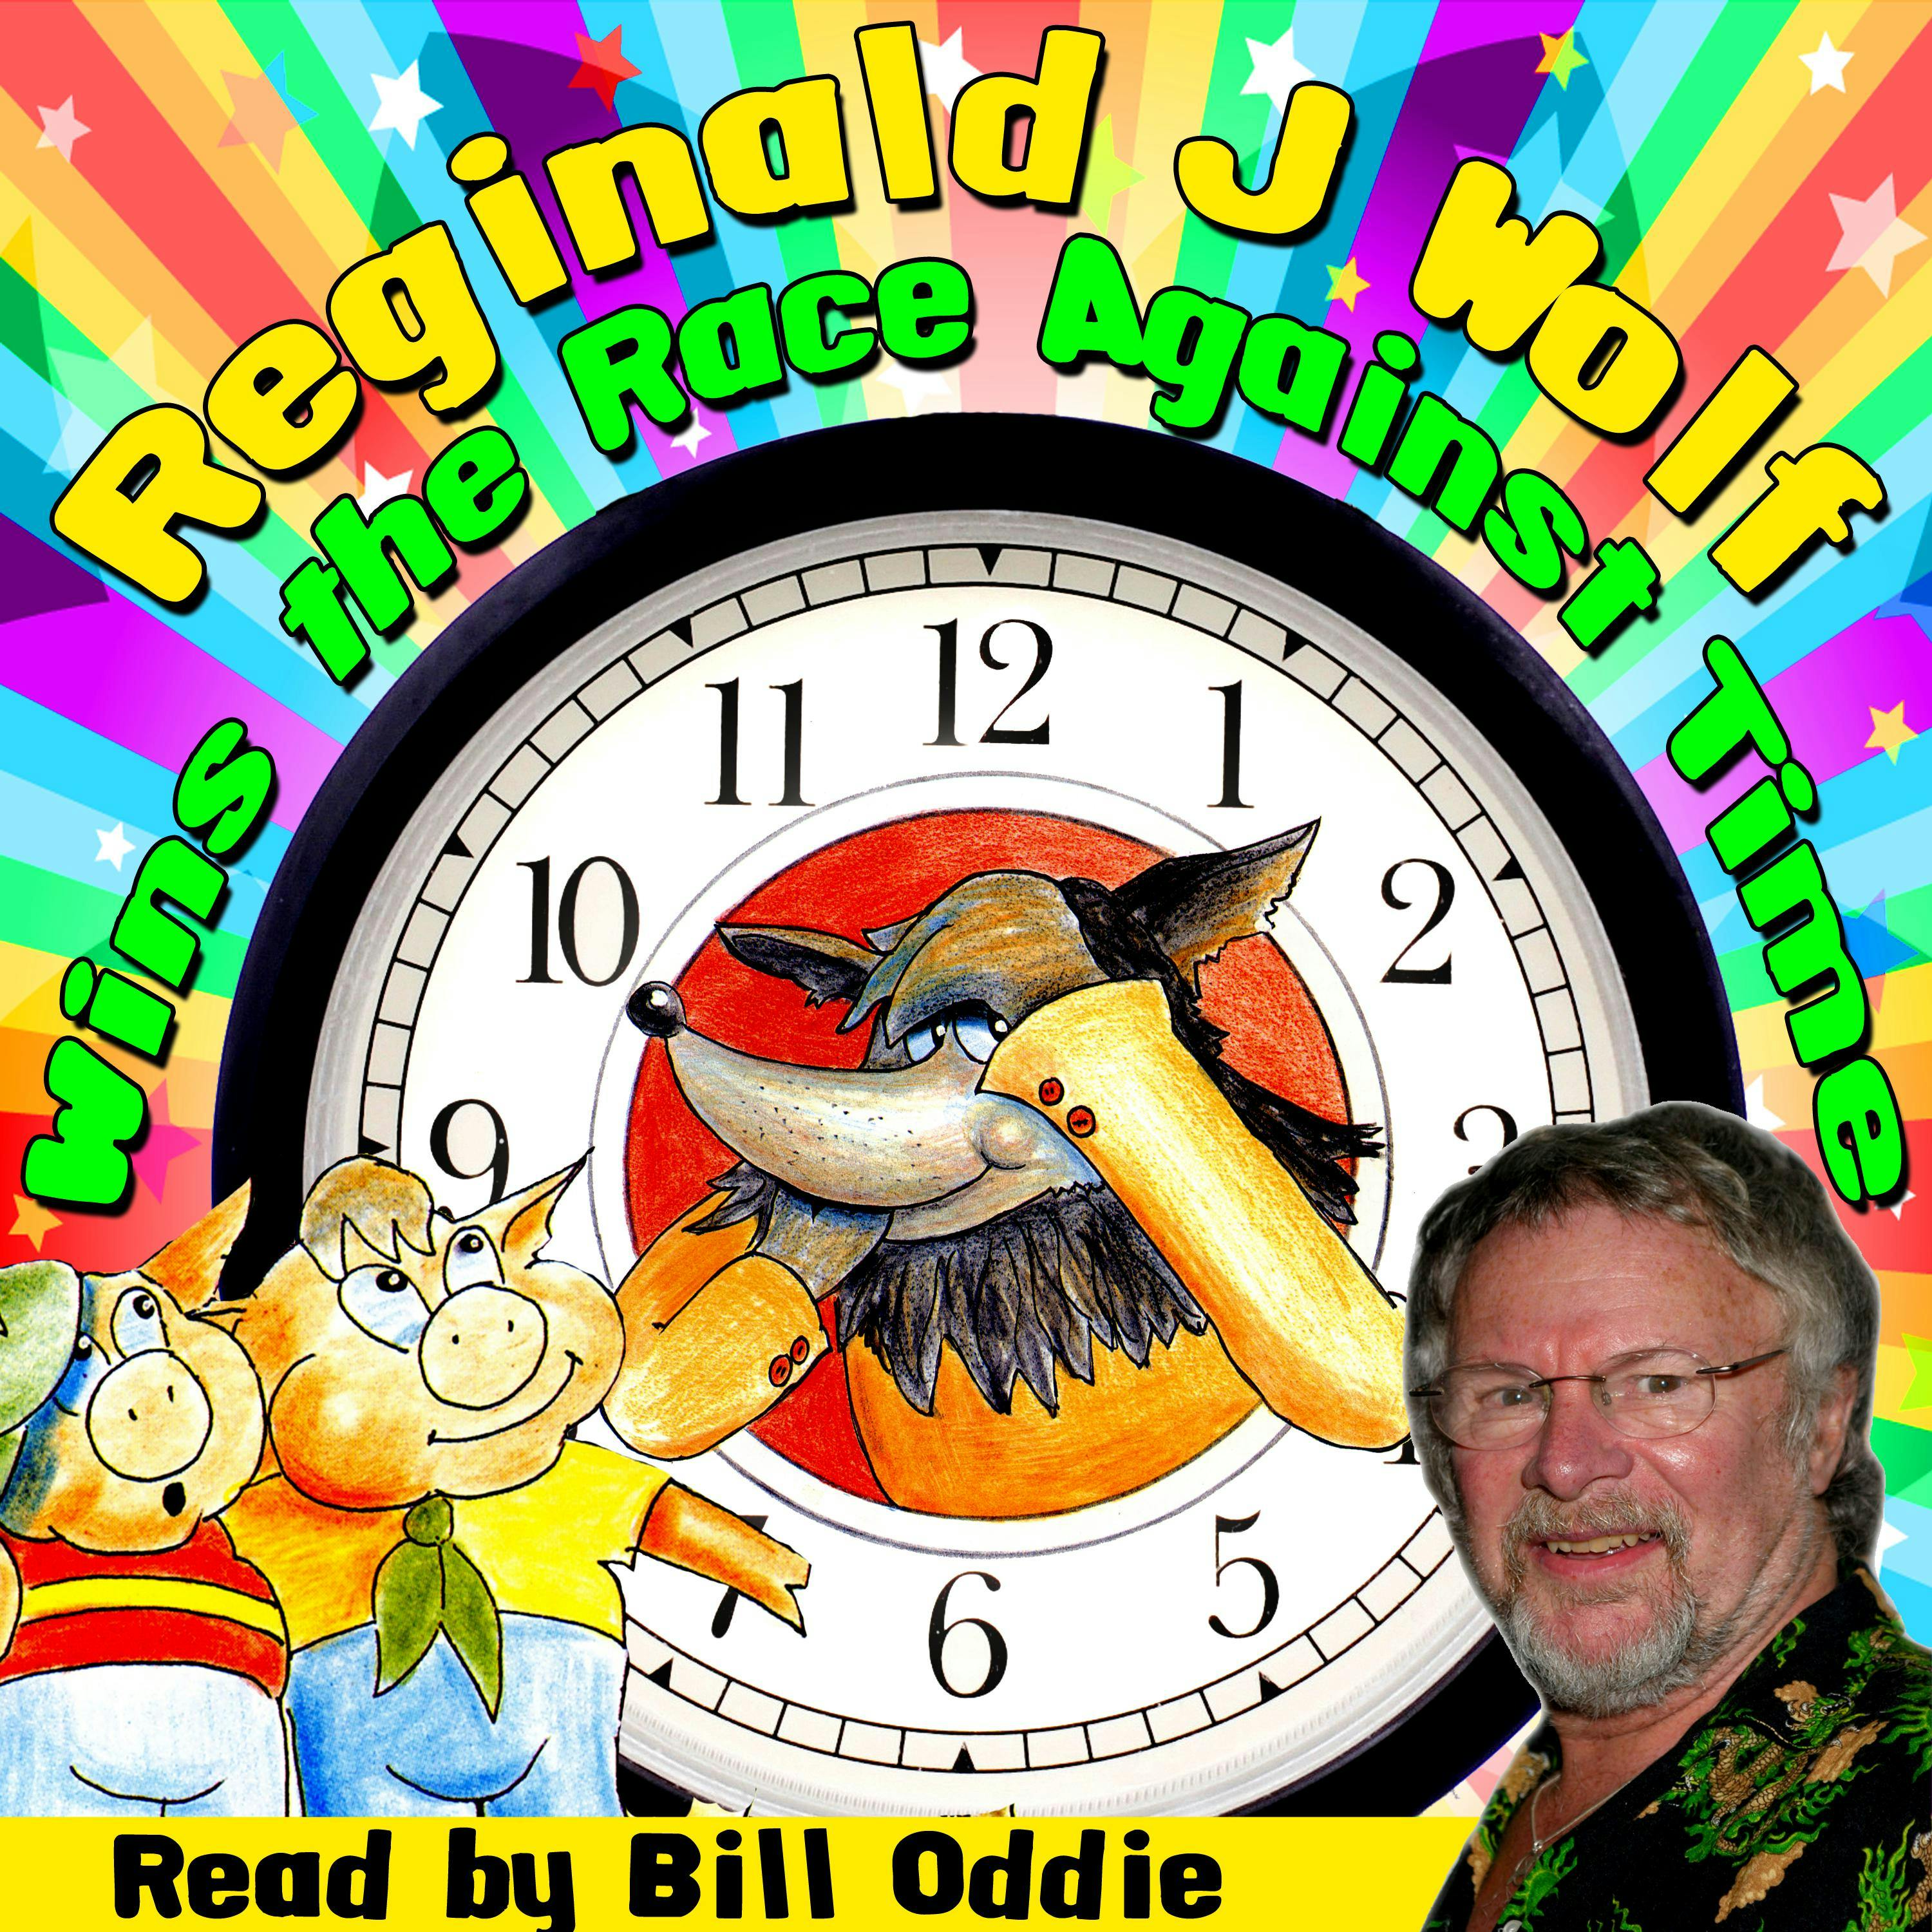 Reginald J Wolf Wins the Race Against Time - William Vandyck